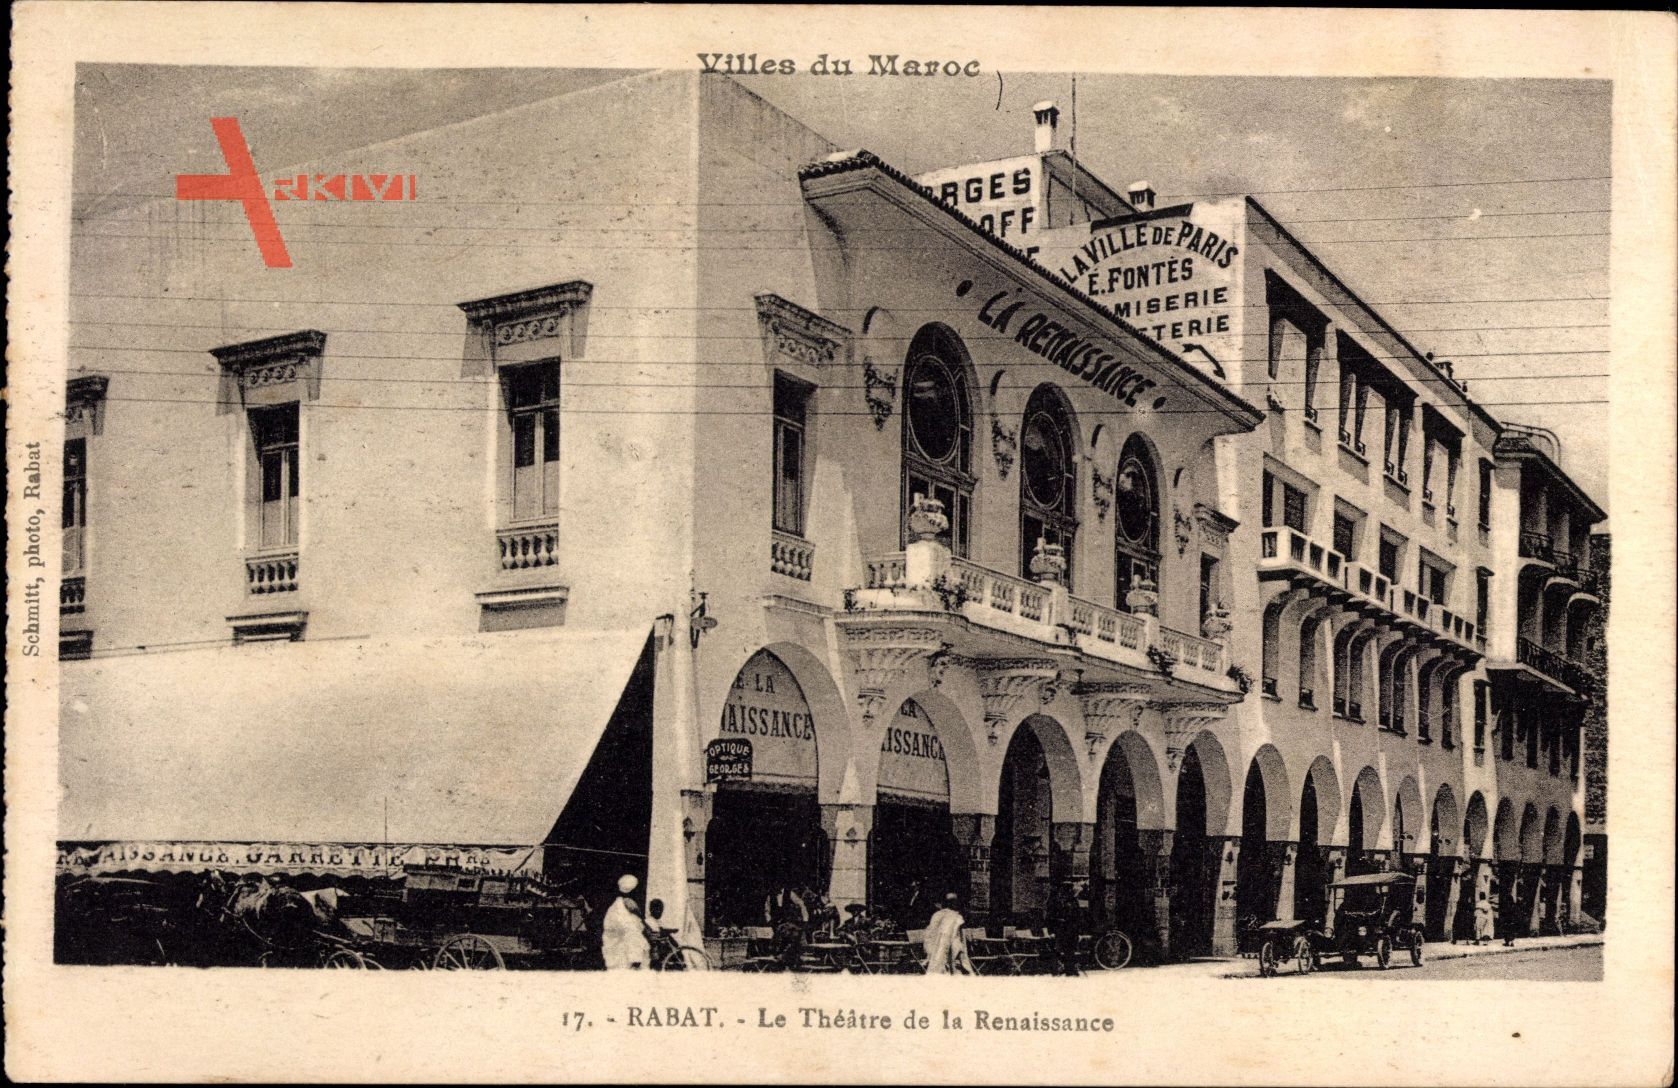 Rabat Marokko, Le Theatre de la Renaissance, La Ville de Paris, E. Fontes